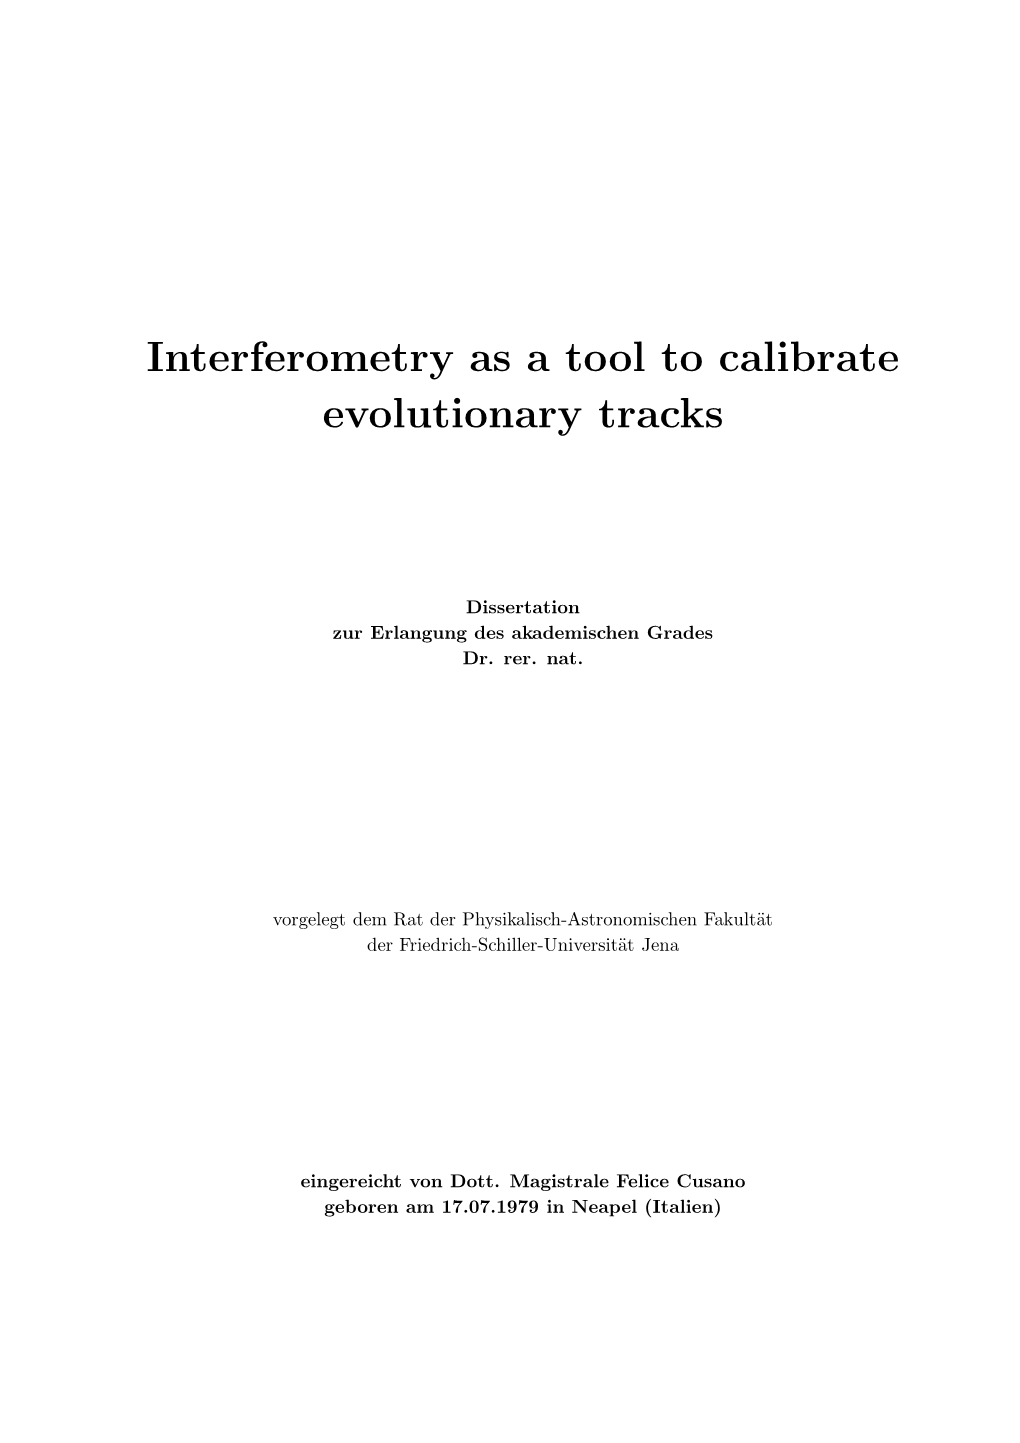 Interferometry As a Tool to Calibrate Evolutionary Tracks